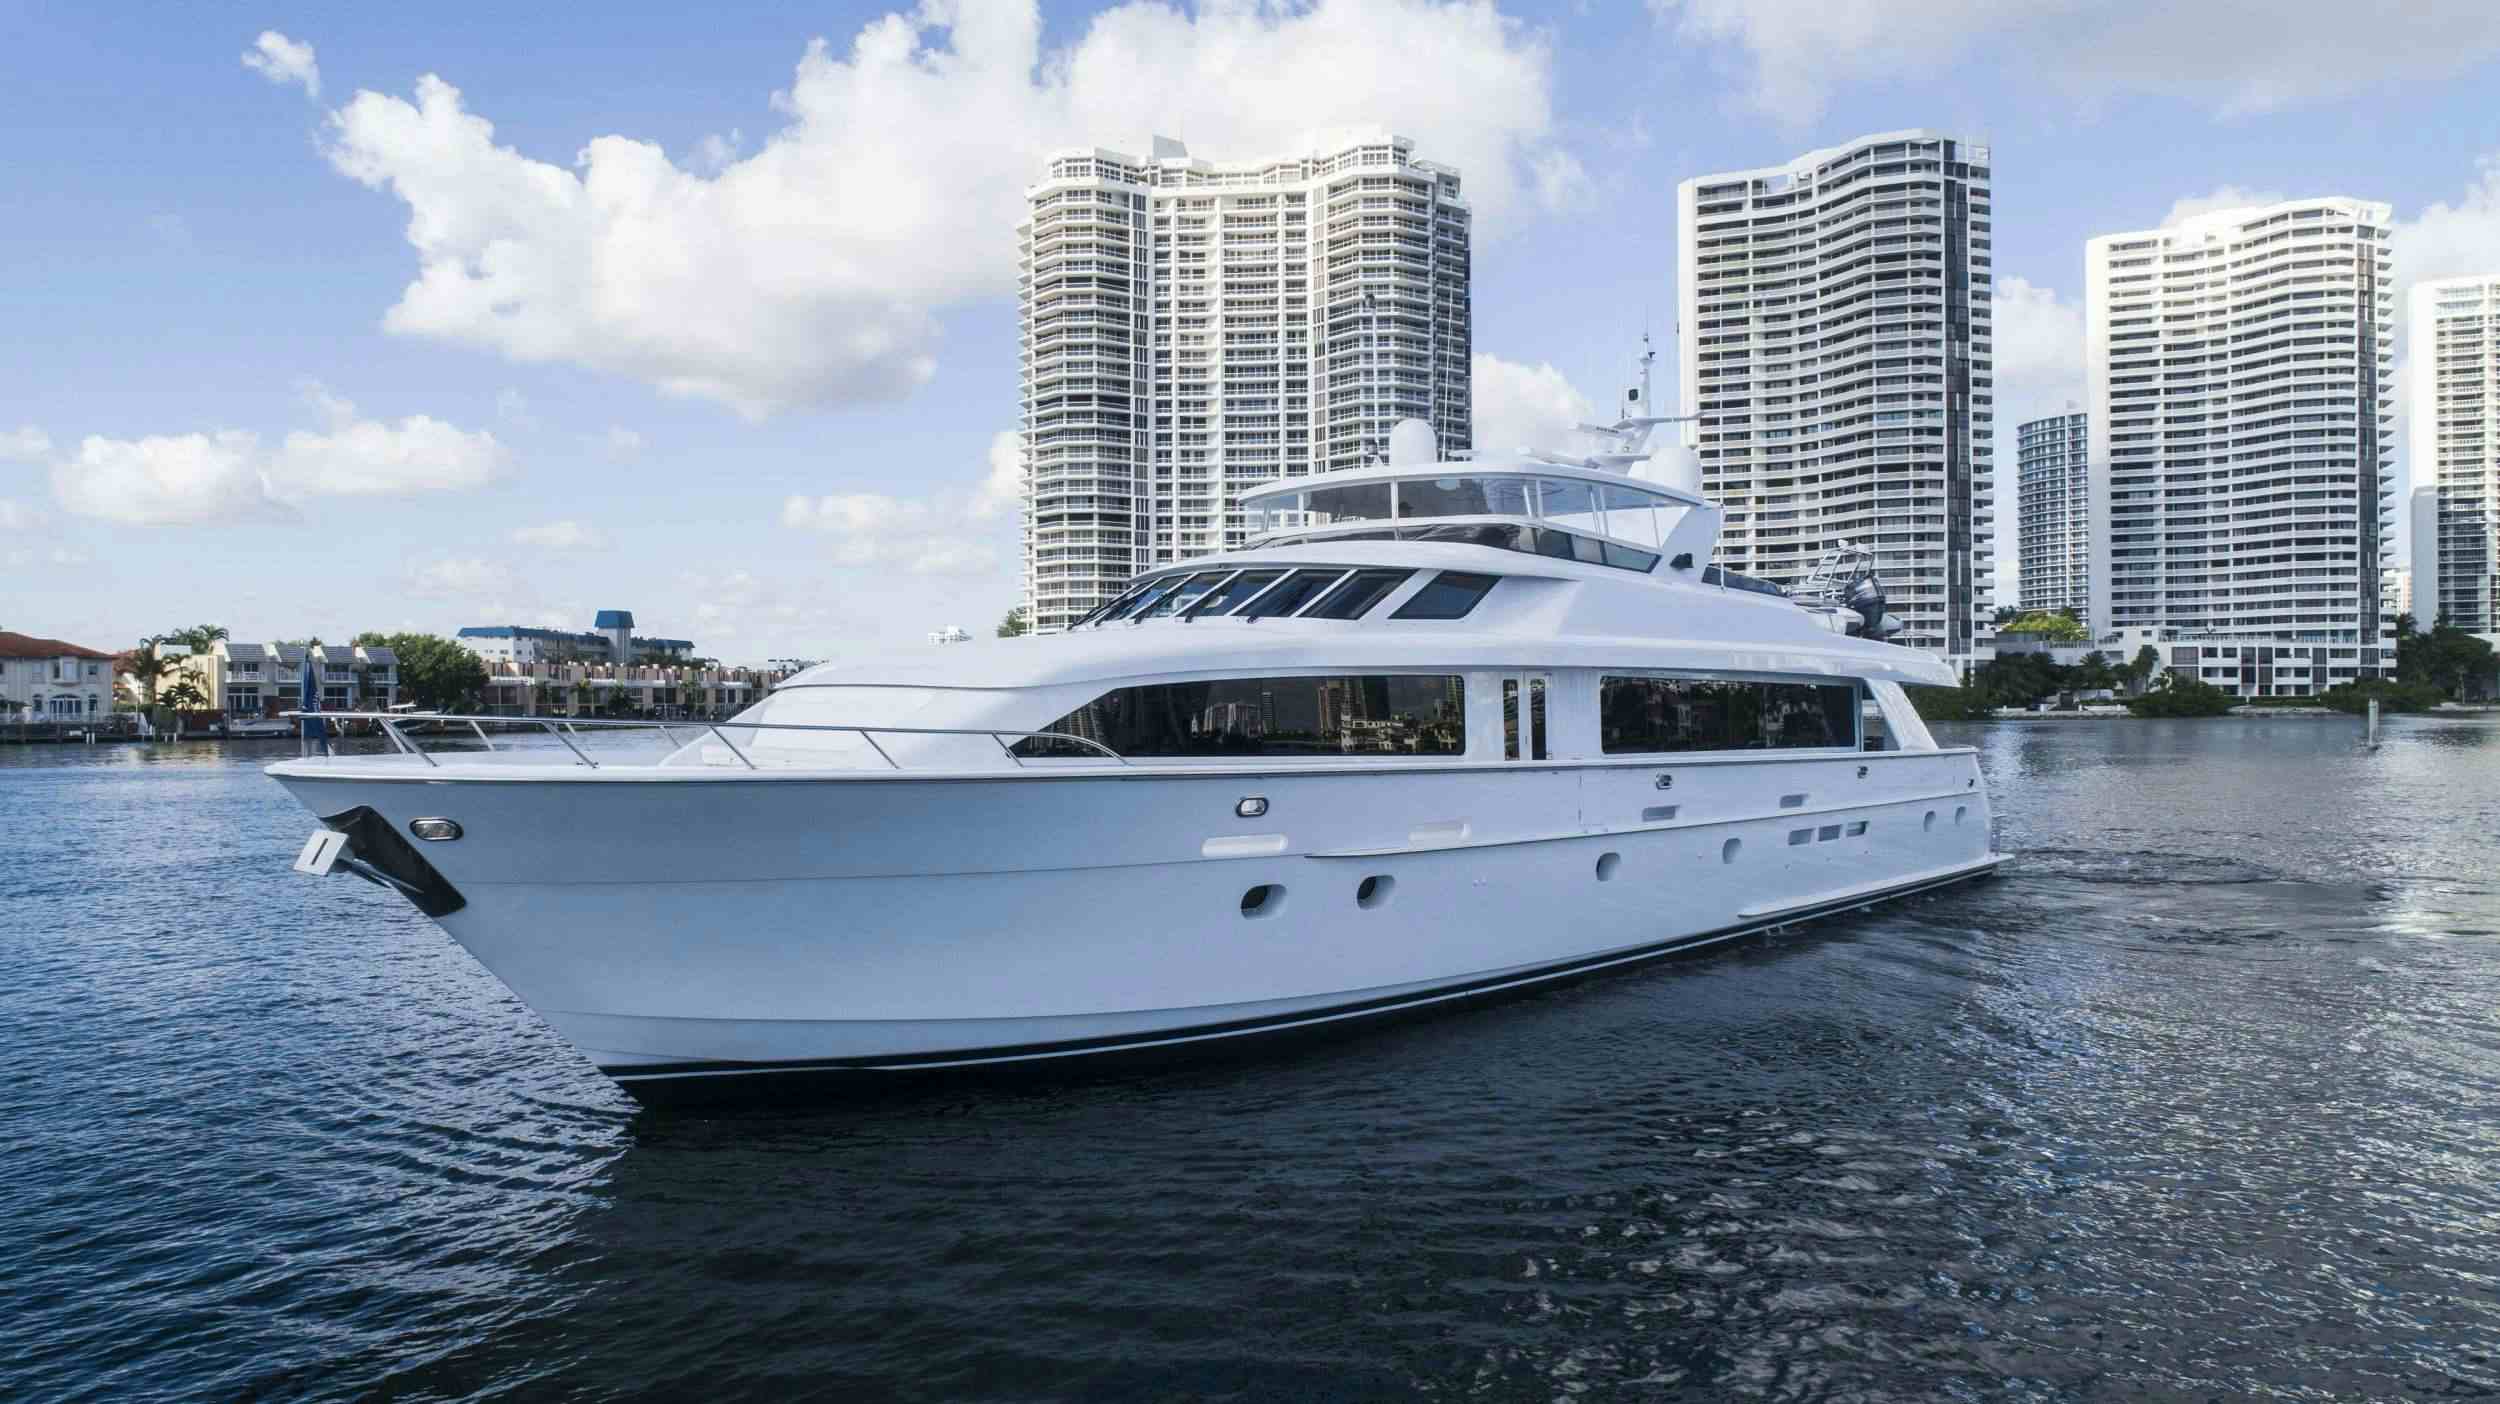 INEVITABLE - Yacht Charter Florida & Boat hire in US East Coast & Bahamas 1